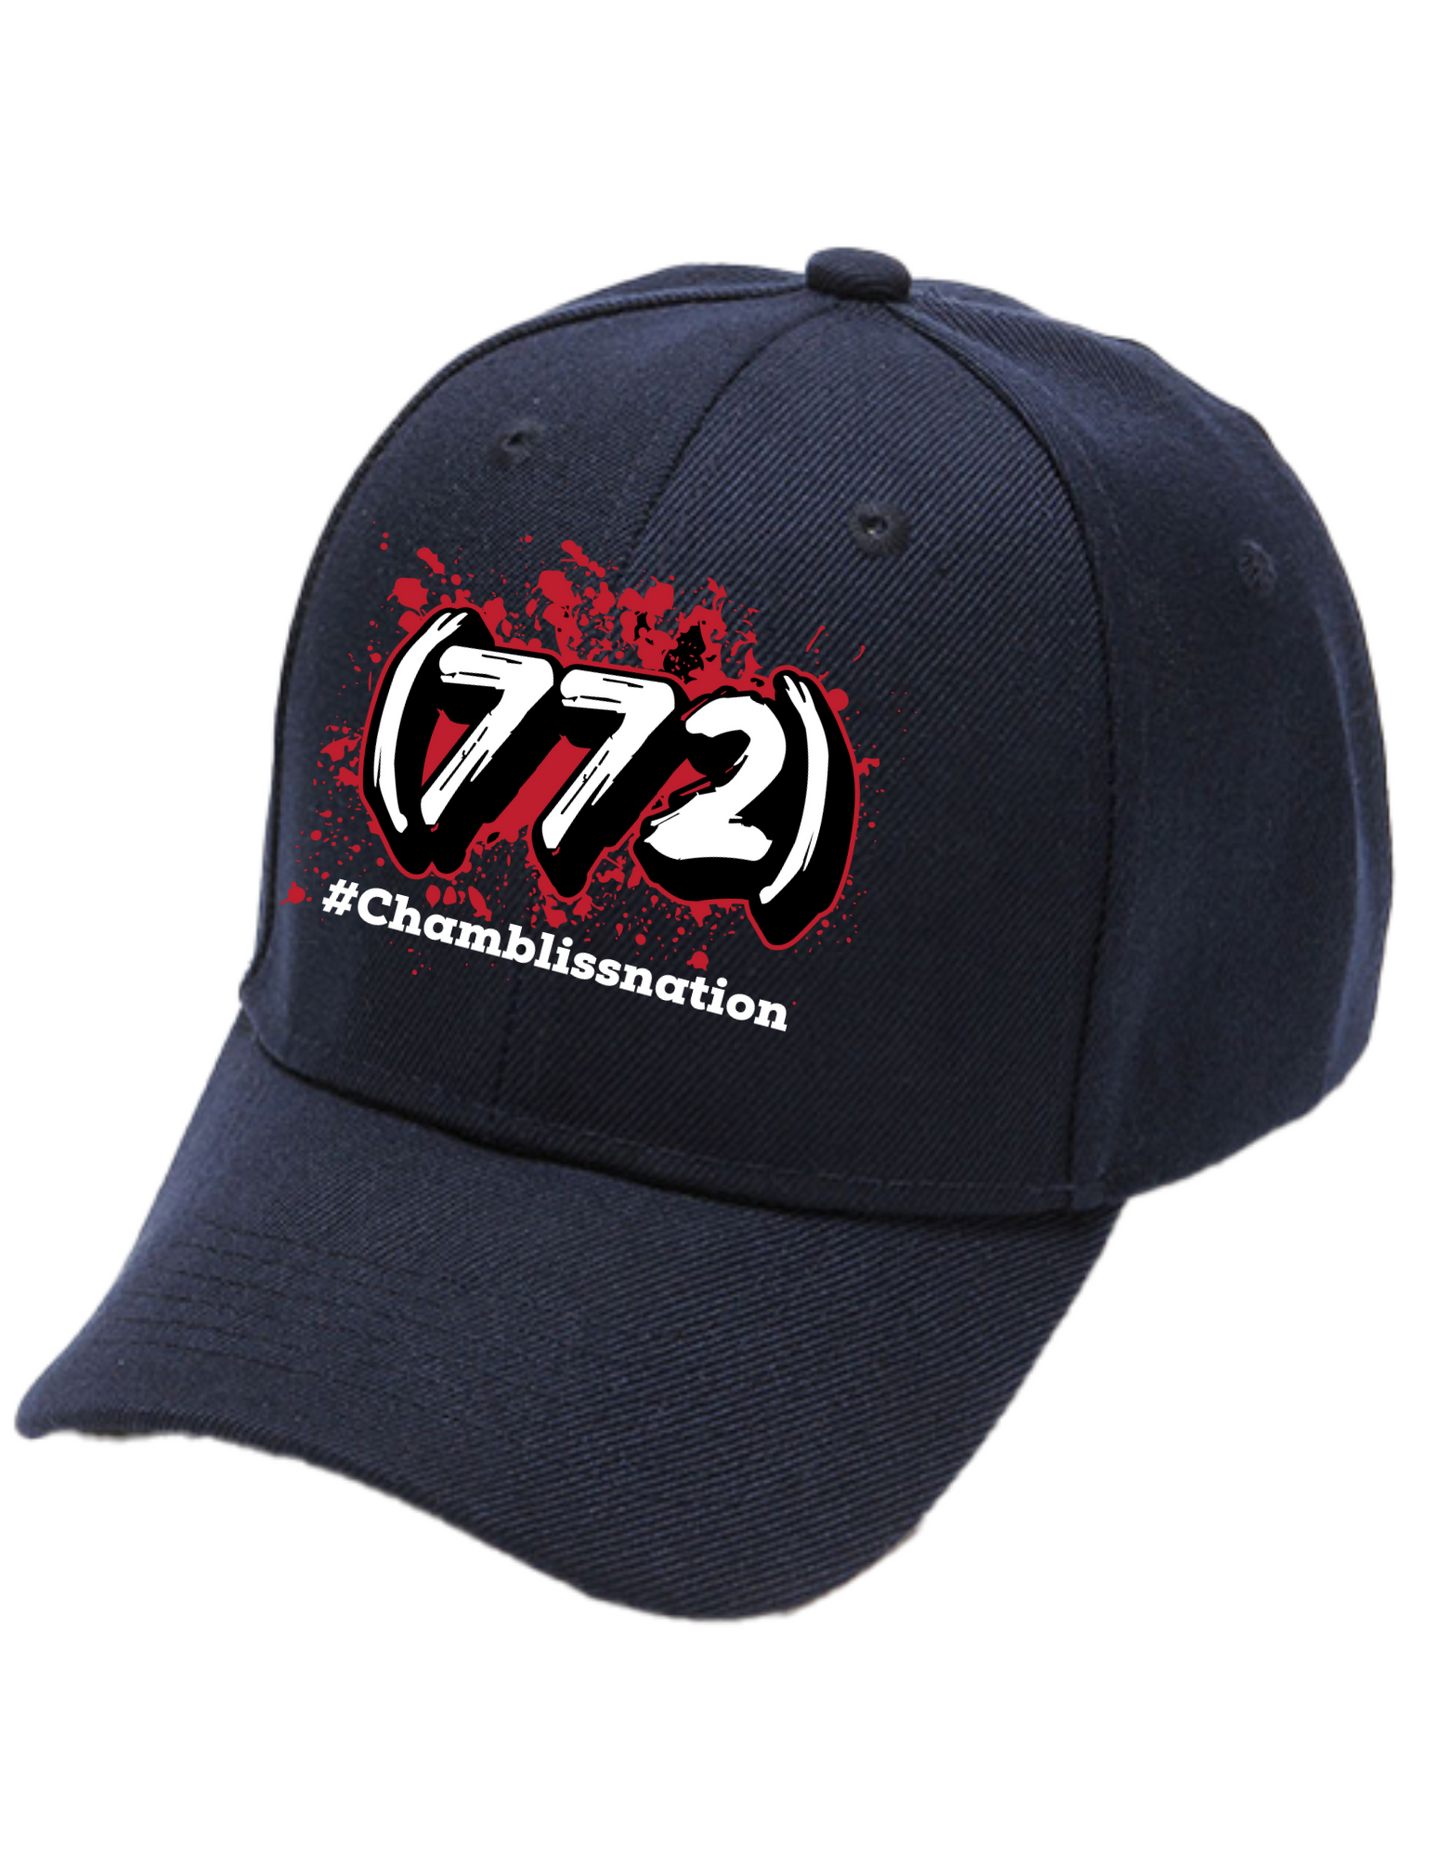 (772) Hats